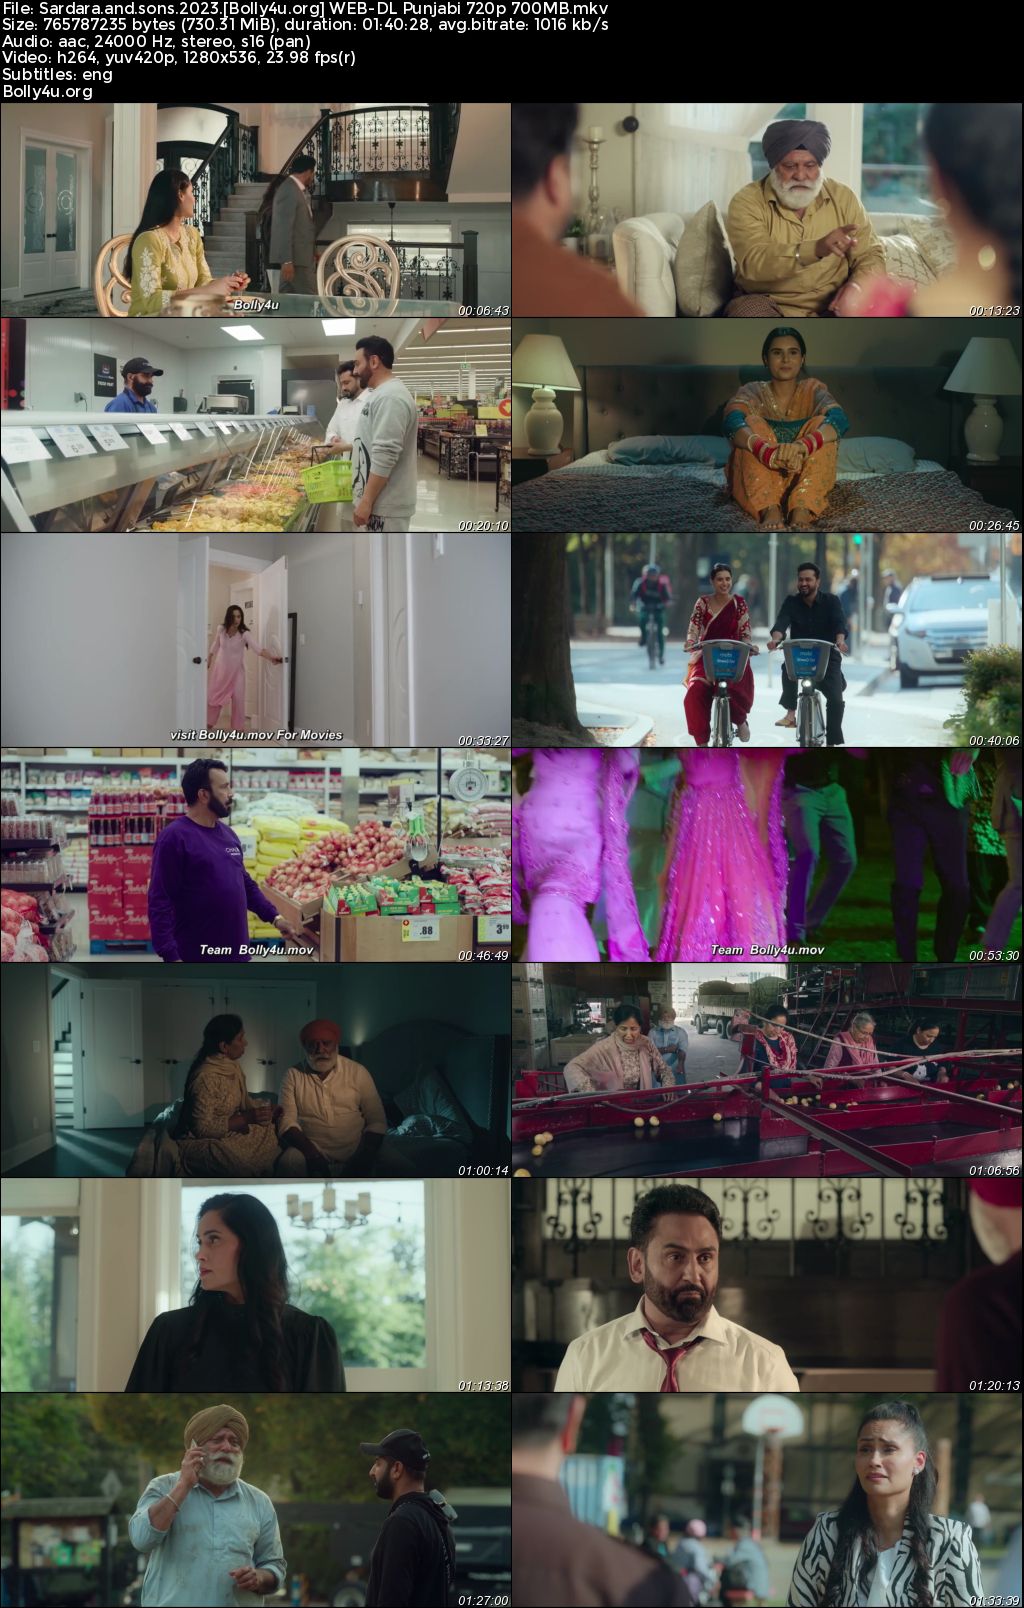 Sardara and Sons 2023 WEB-DL Punjabi Full Movie Download 1080p 720p 480p